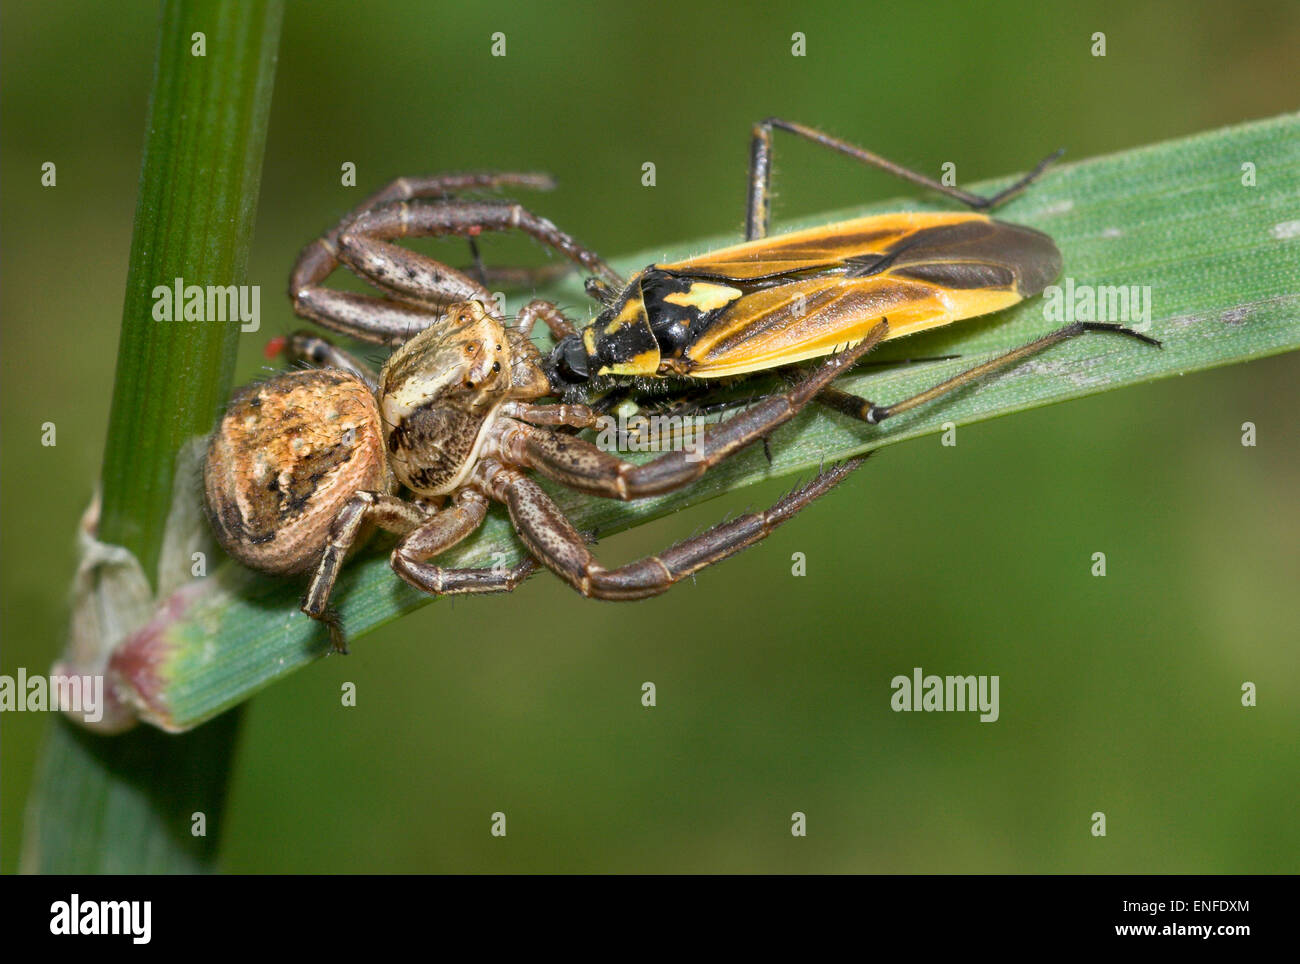 Crab Spider - Xysticus cristatus - with bug prey Stock Photo